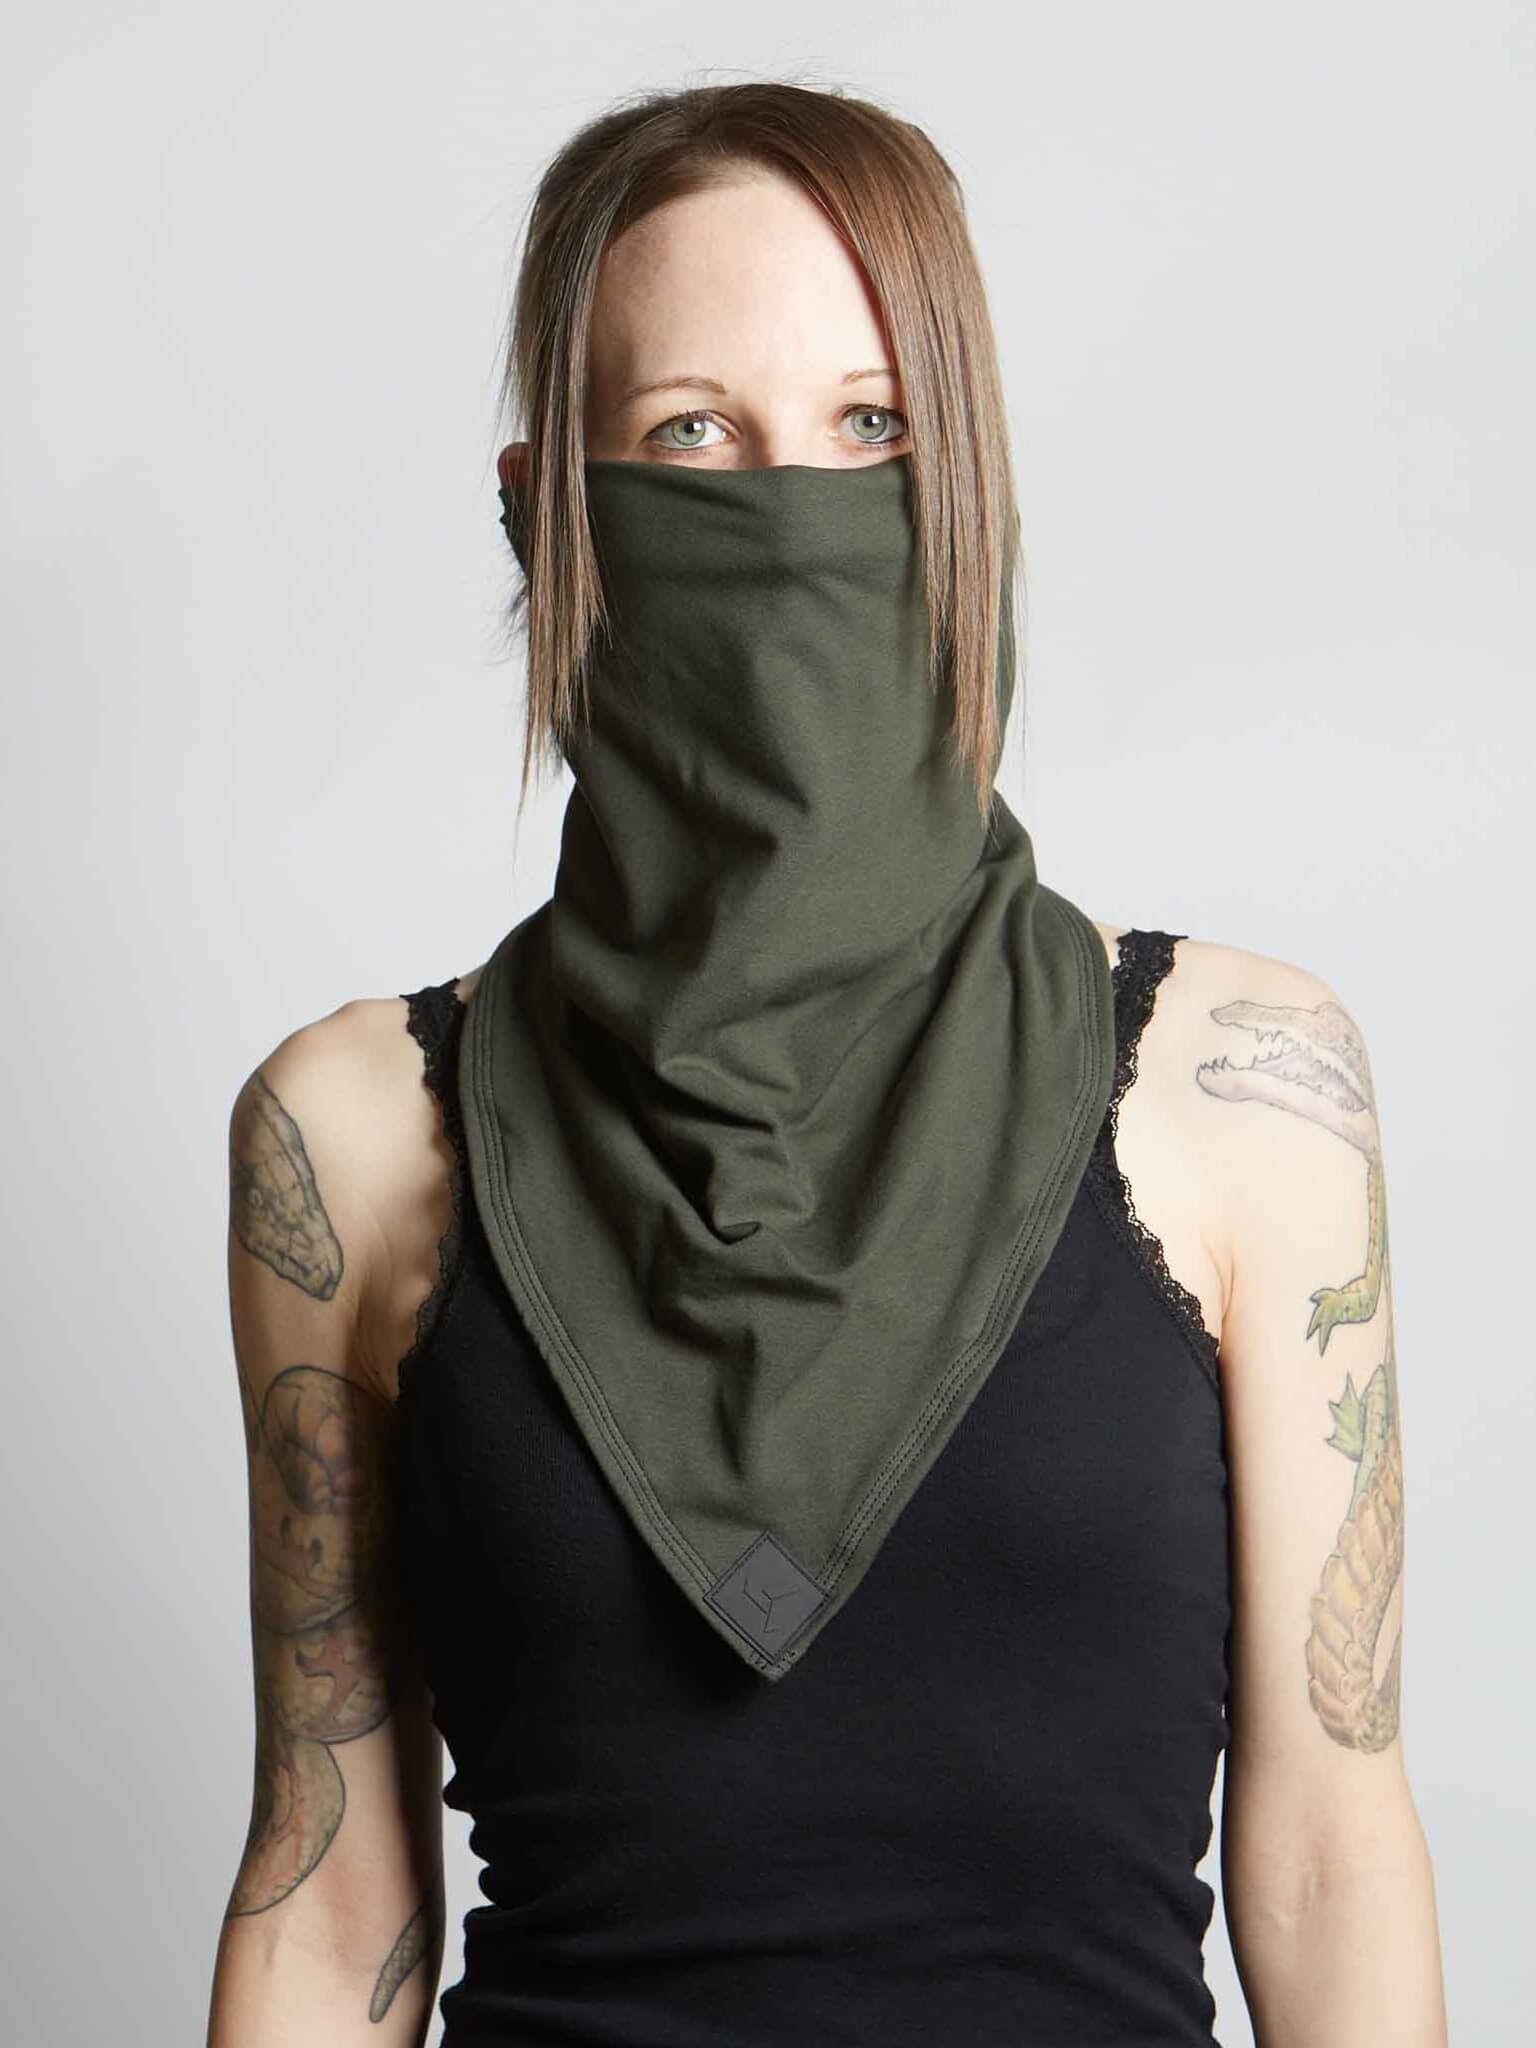 Bandit Gaiter: Breathable Neck Gear for Cyberpunk Style – Crisiswear